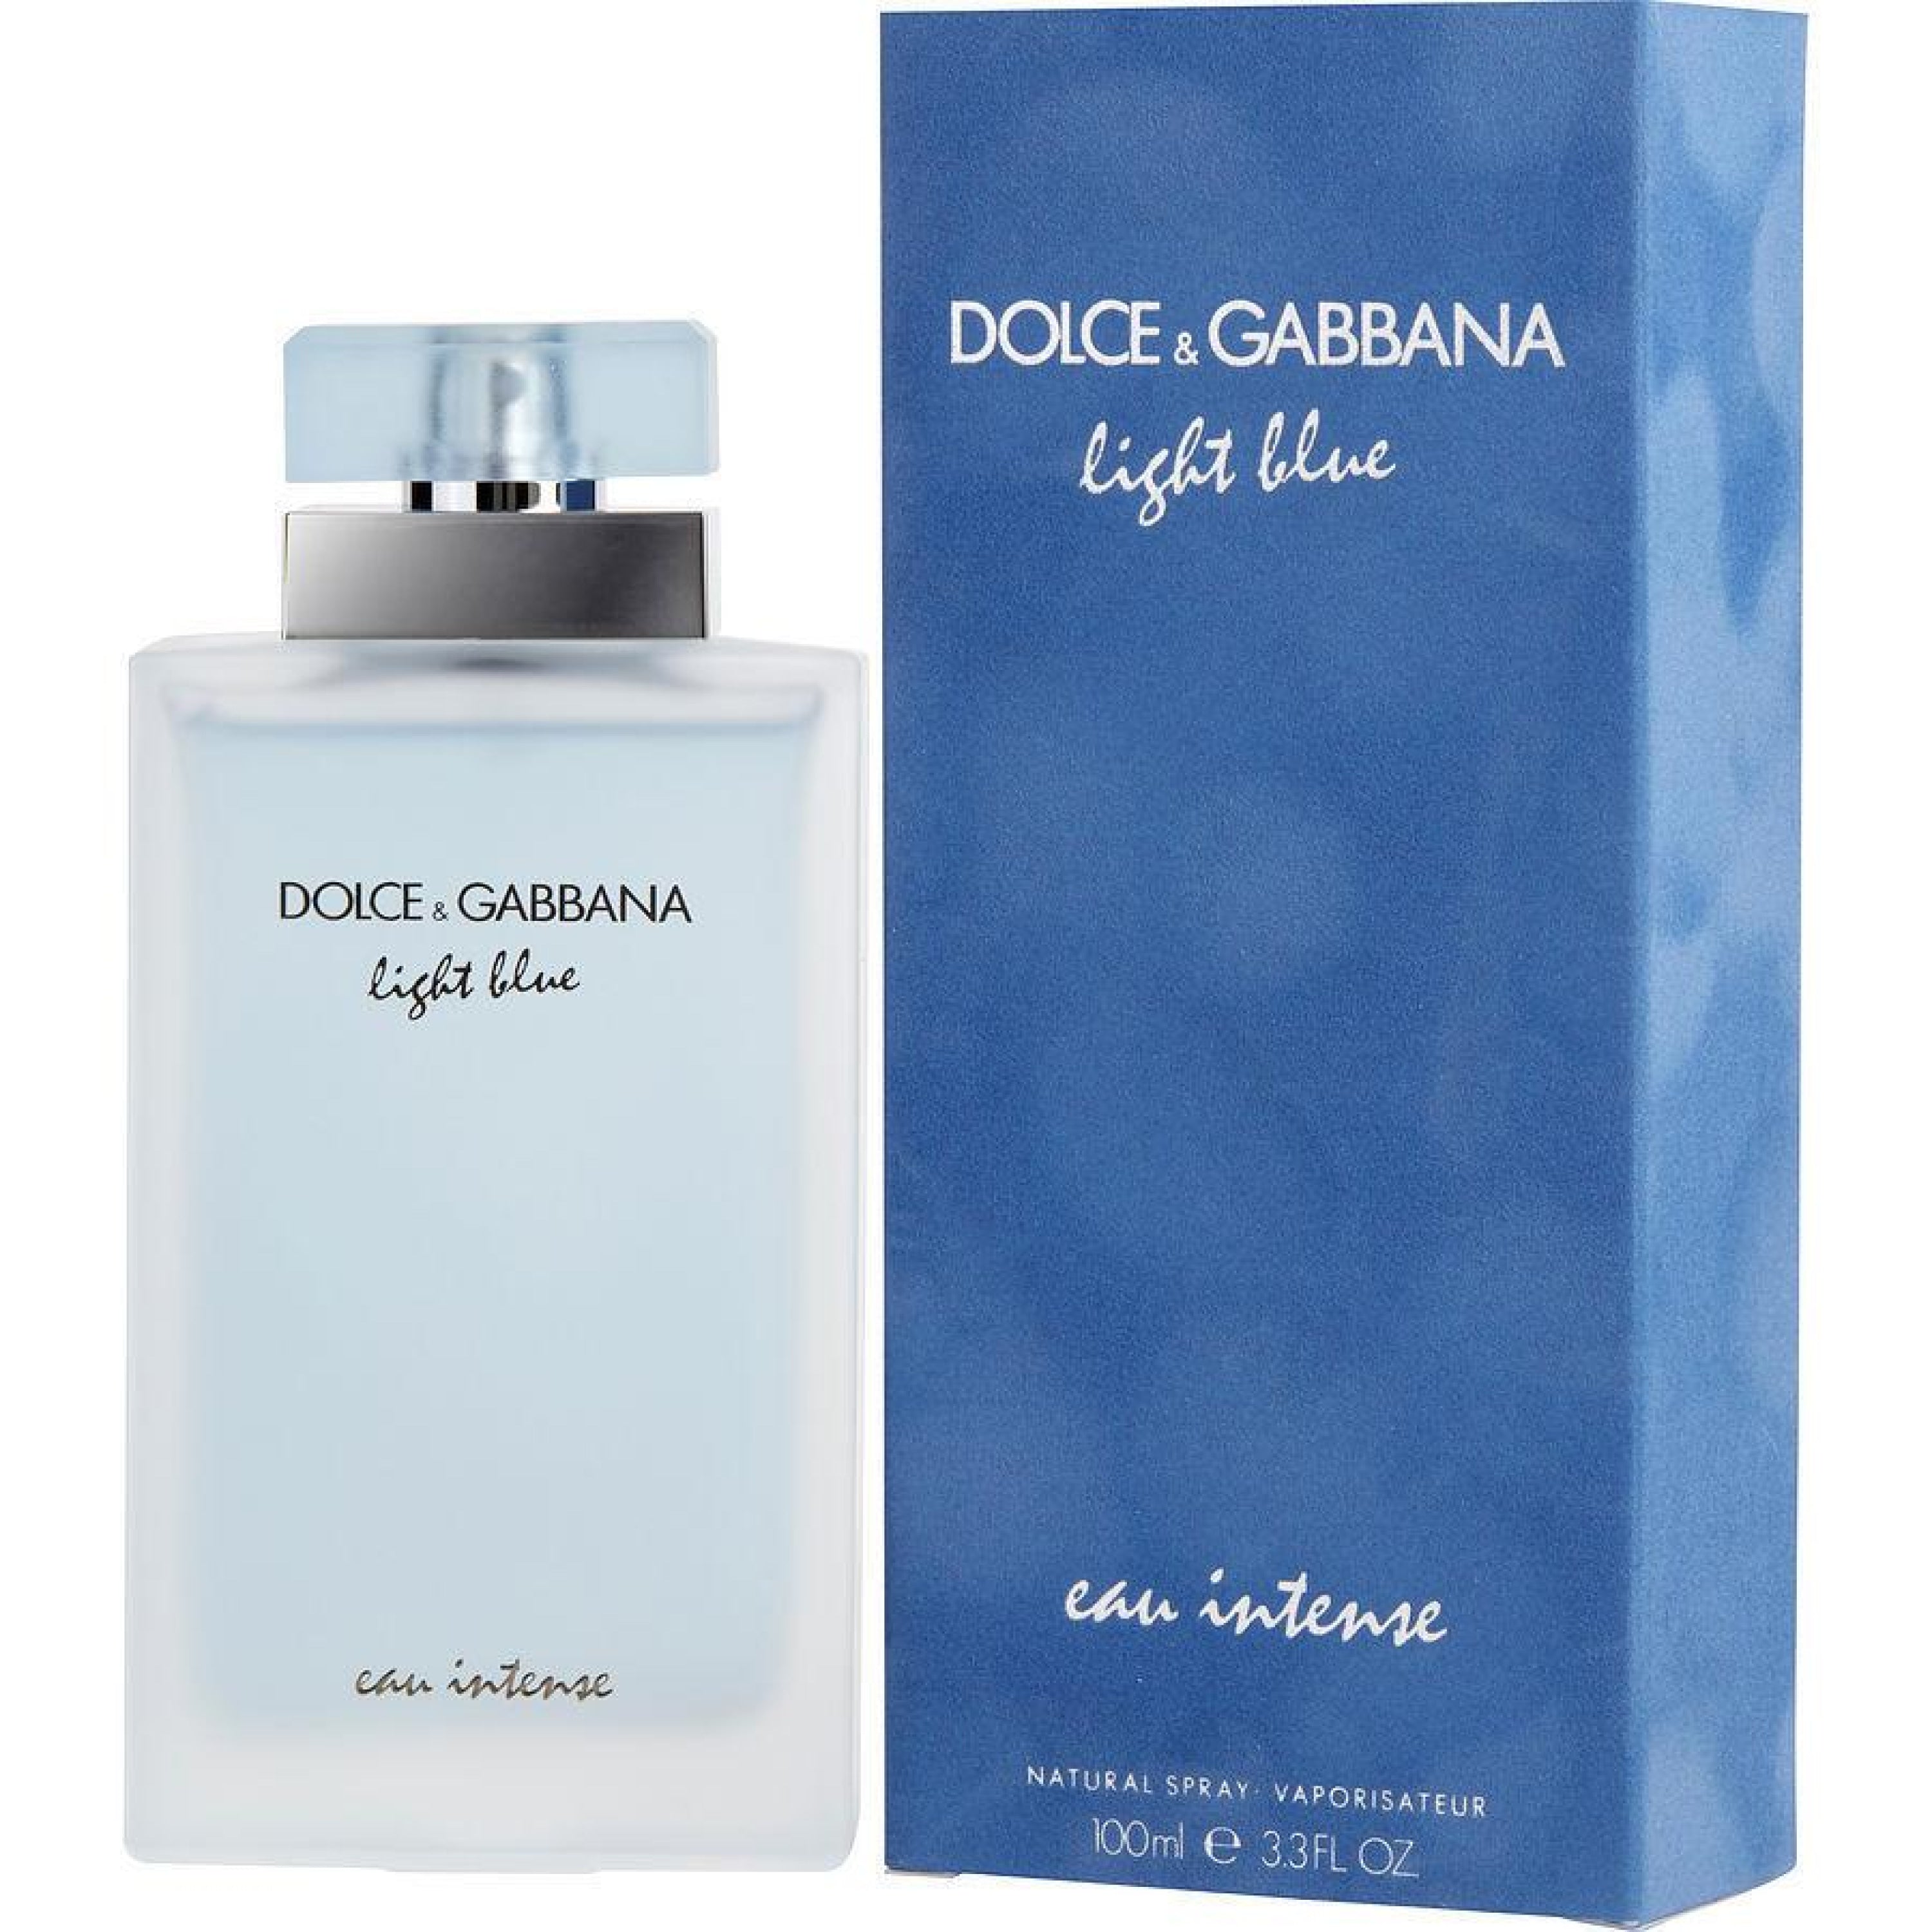 dolce & gabbana light blue eau intense 100ml edp spray (w)